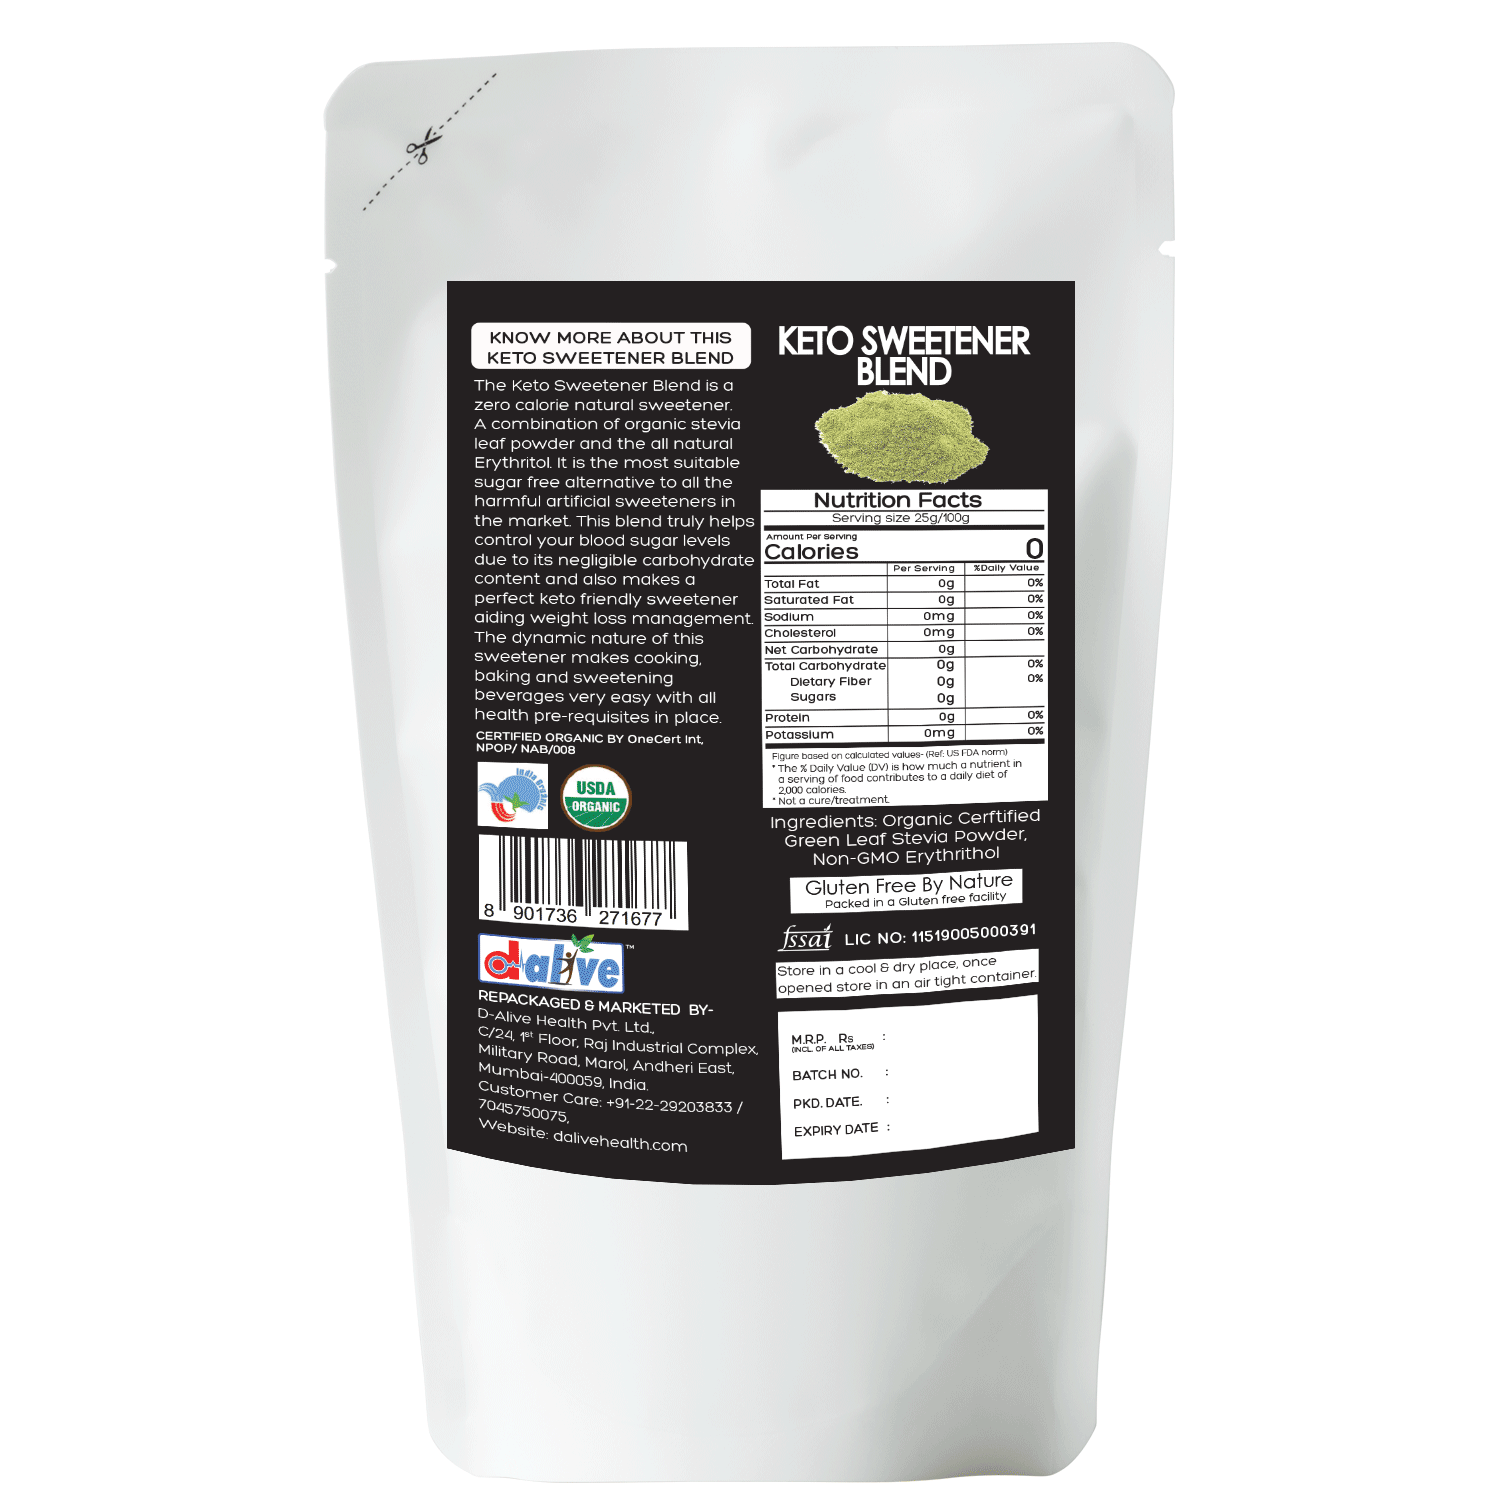 Product: D-alive Buckwheat flour – 500g